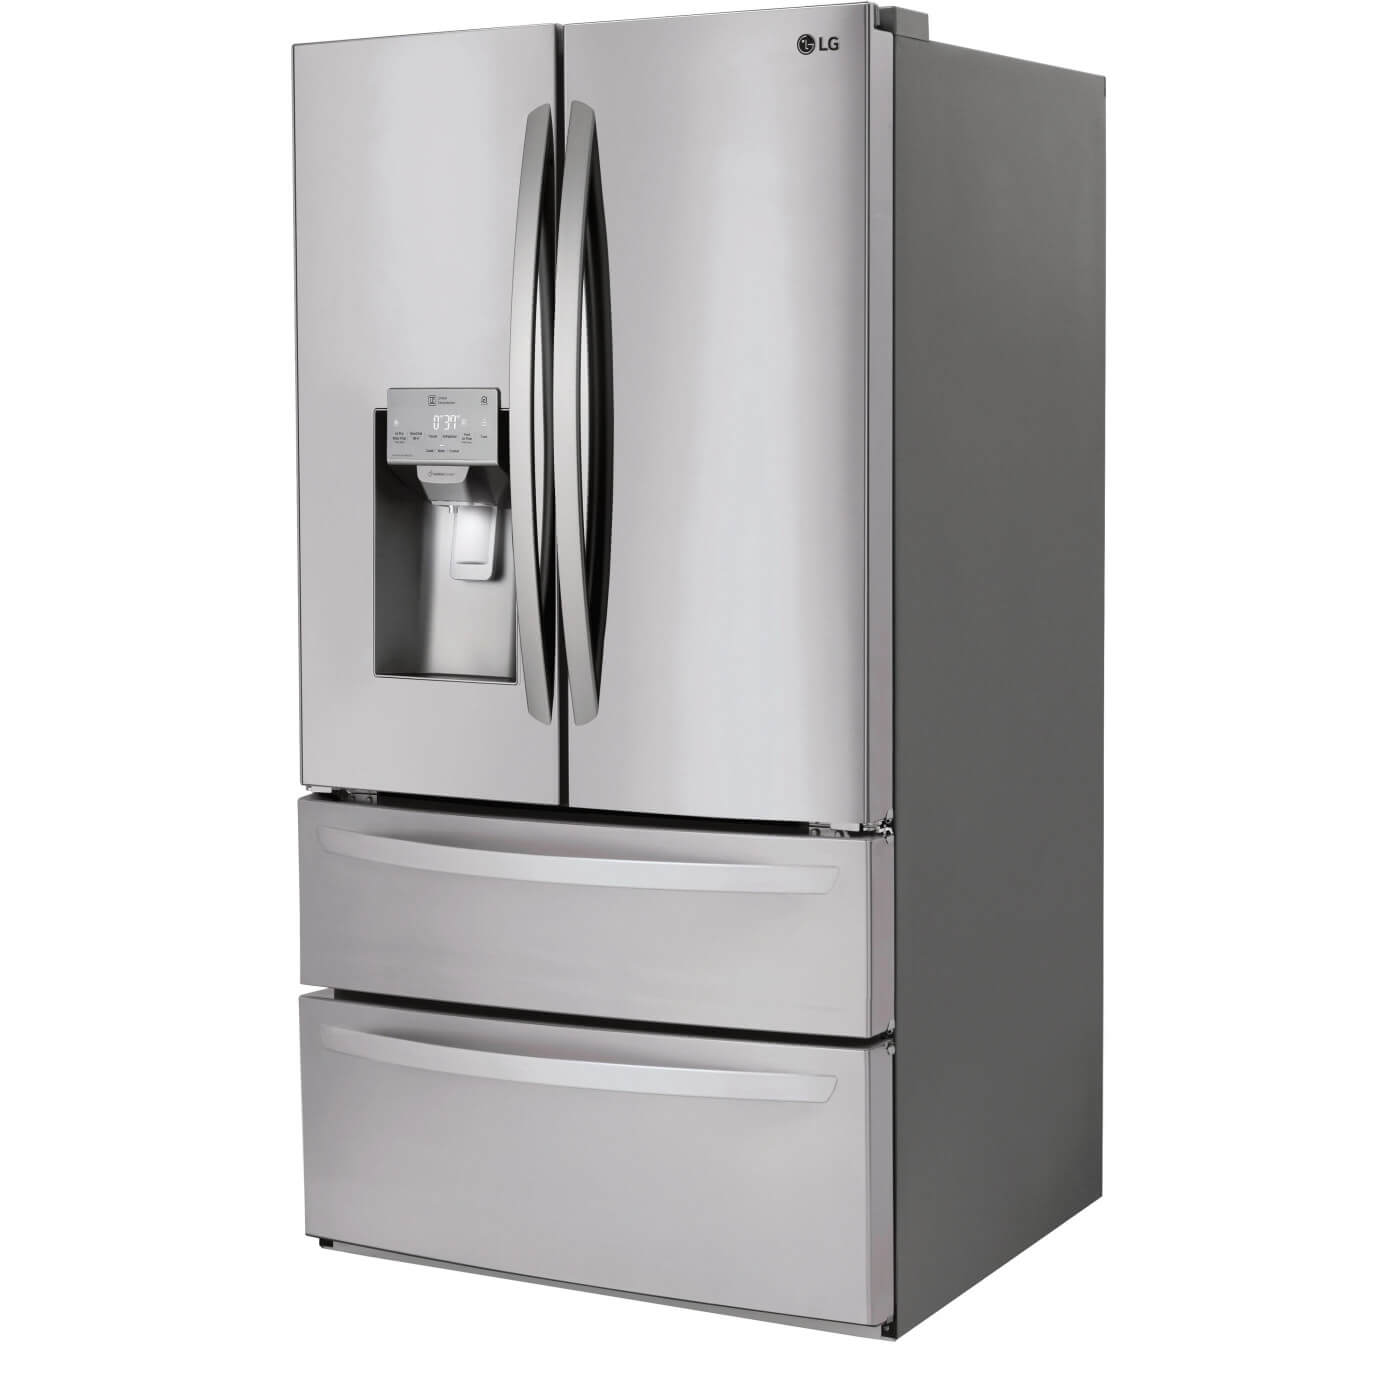 LG Appliances Refrigerator 36 Inch 4-Door French Door Refrigerator in Stainless Steel 28 Cu. Ft. (LMXS28626S)